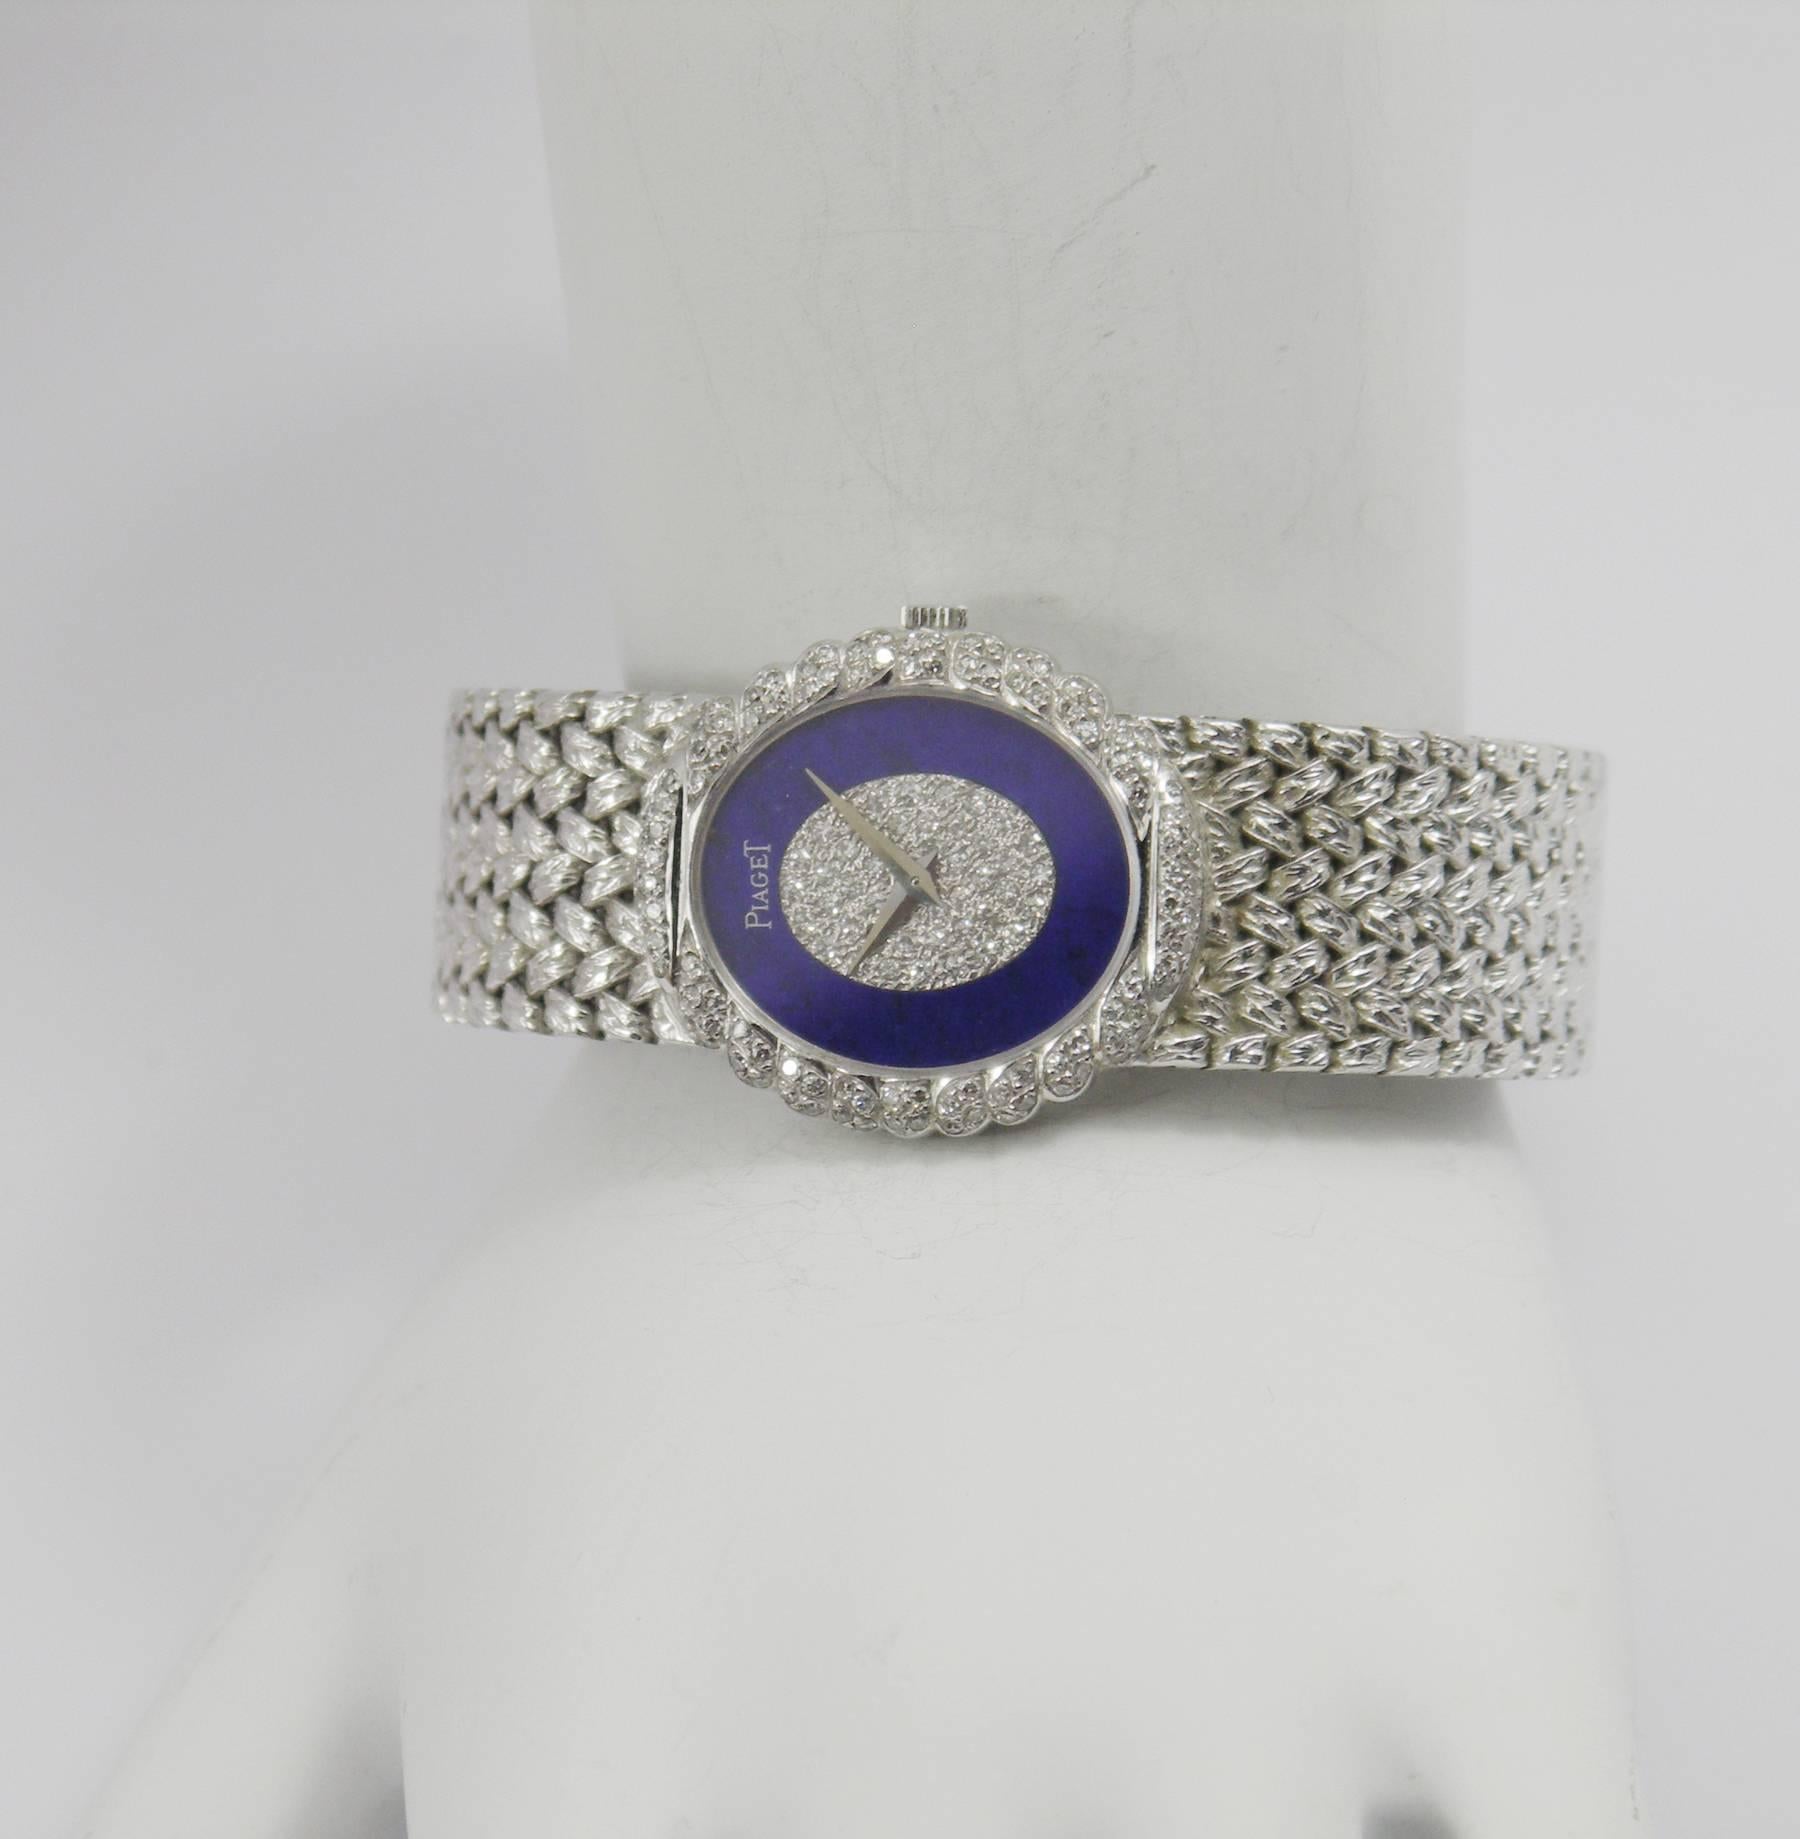 Piaget Ladies White Gold Pavé Diamond Lapis Lazuli Dial Wristwatch 1